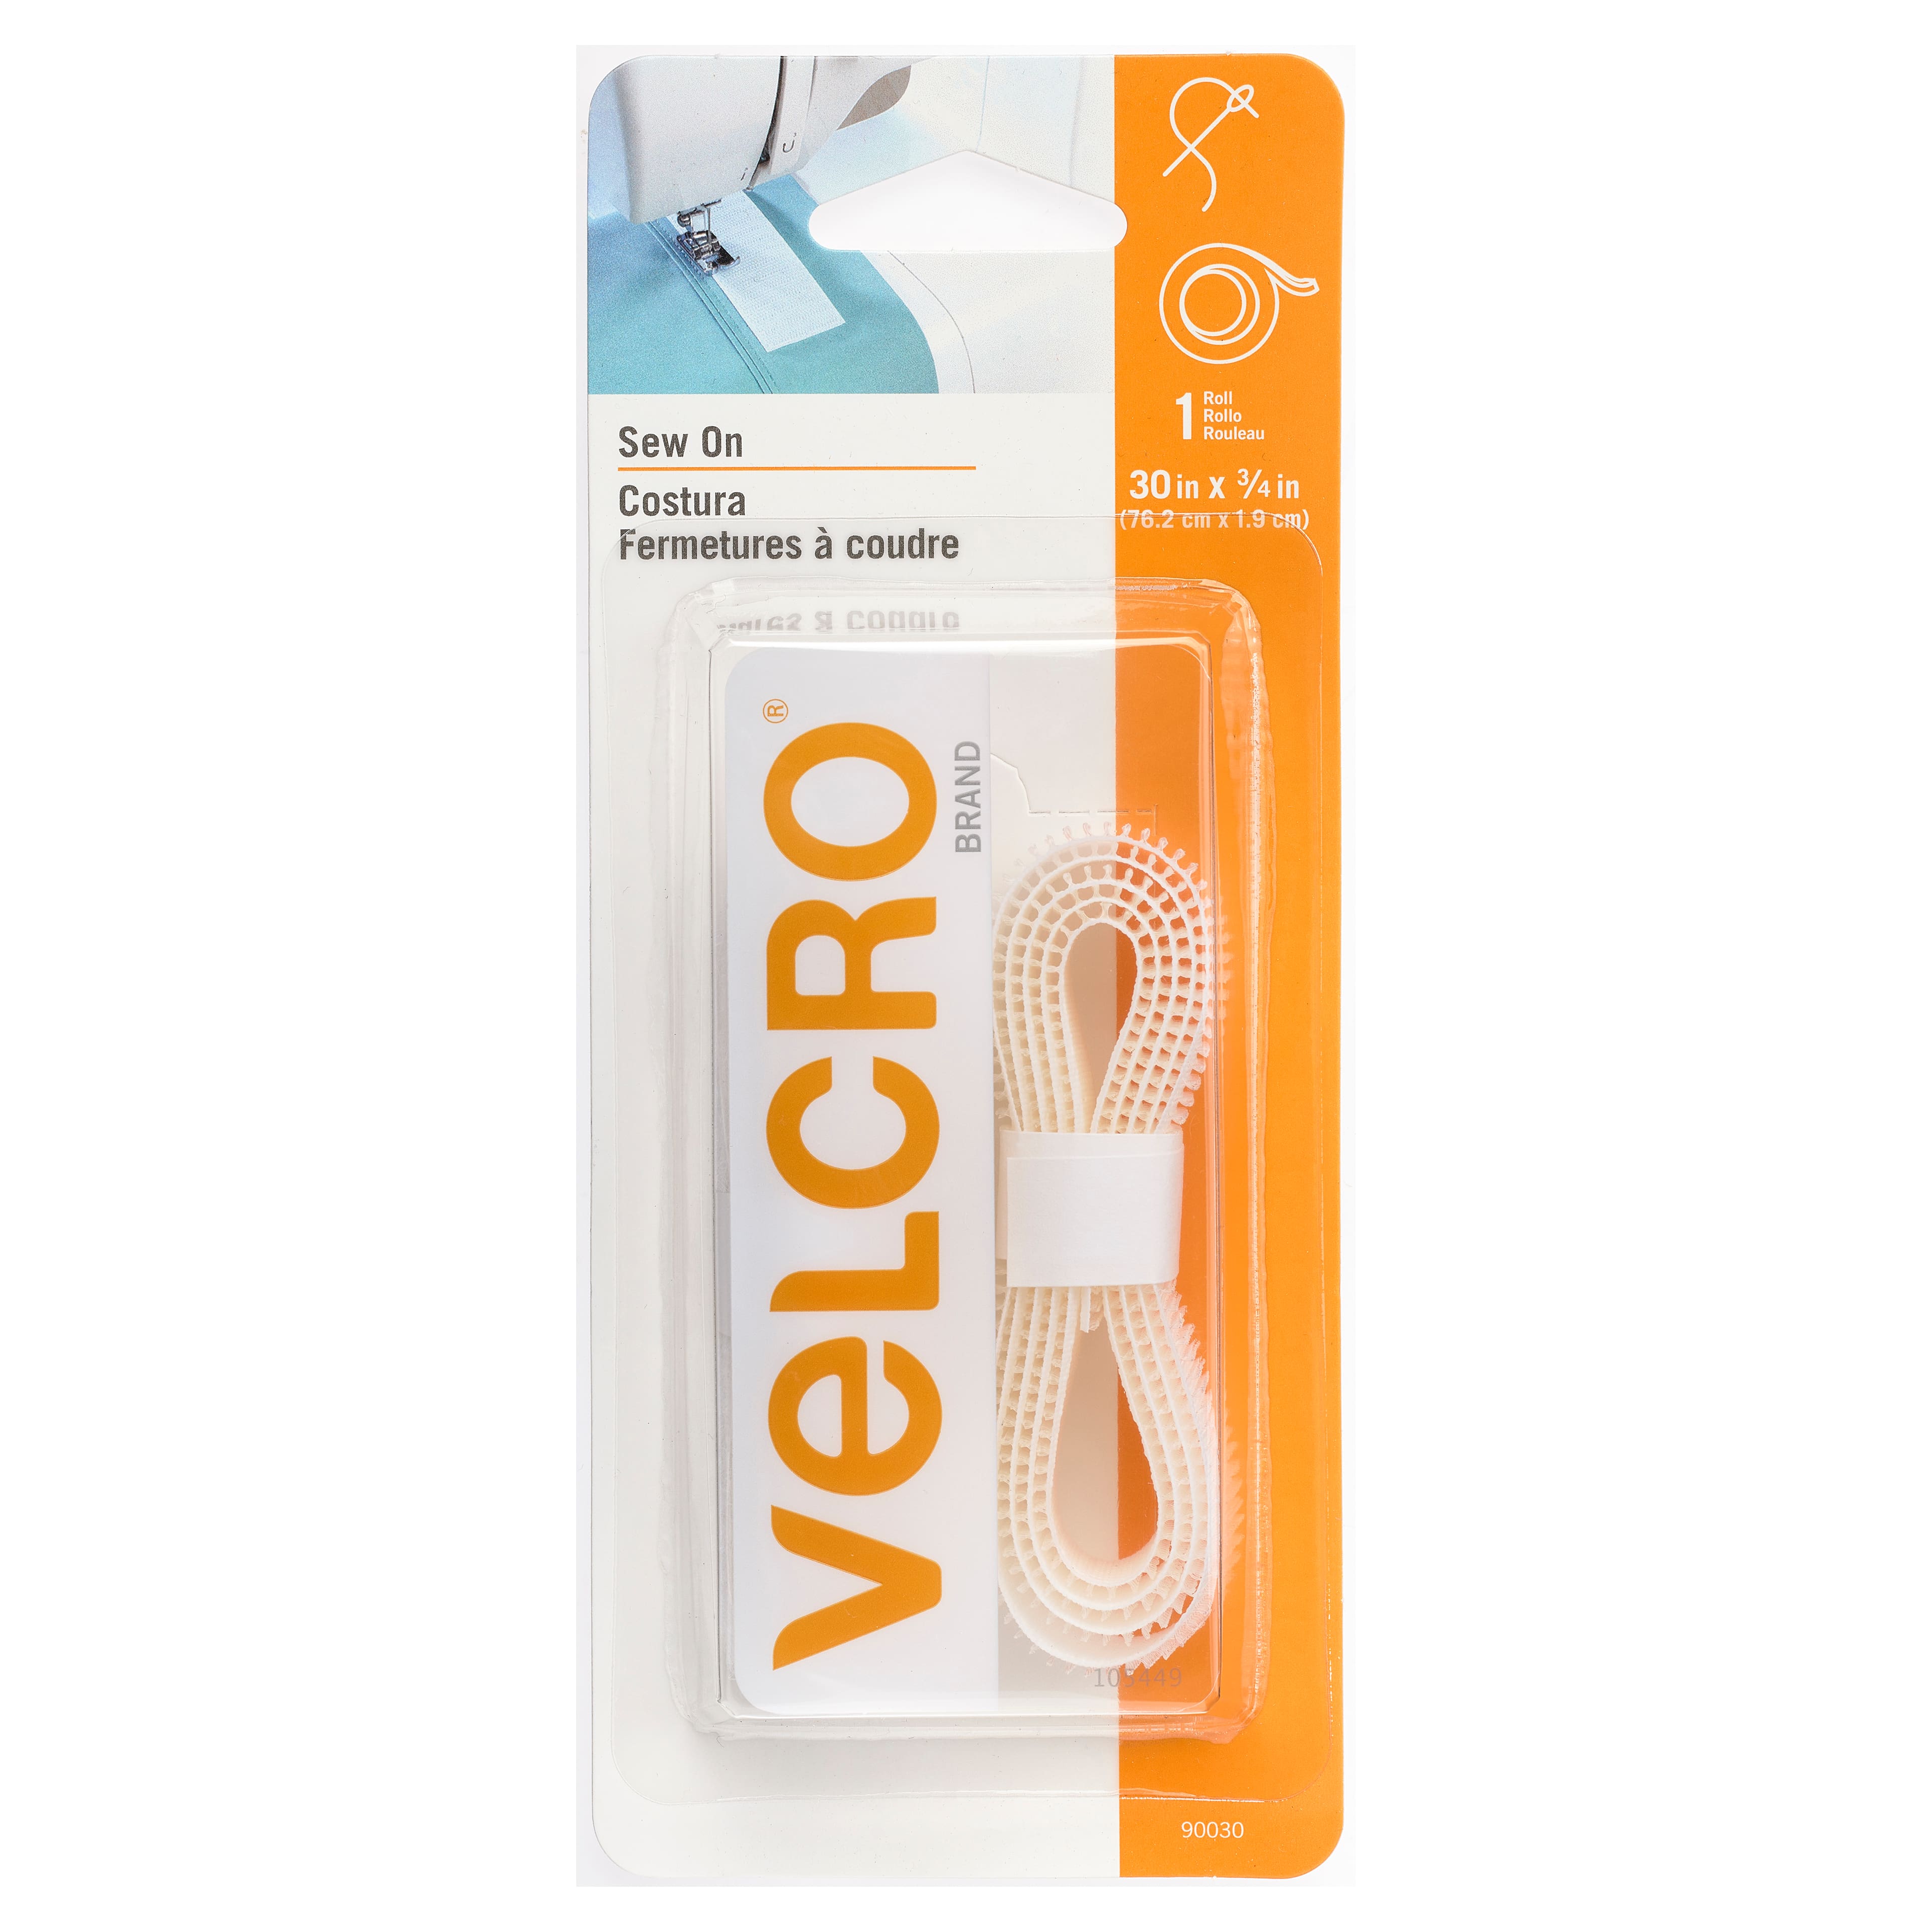 Velcro Brand Hook & Loop Strip Pack in White (Multiple Sizes